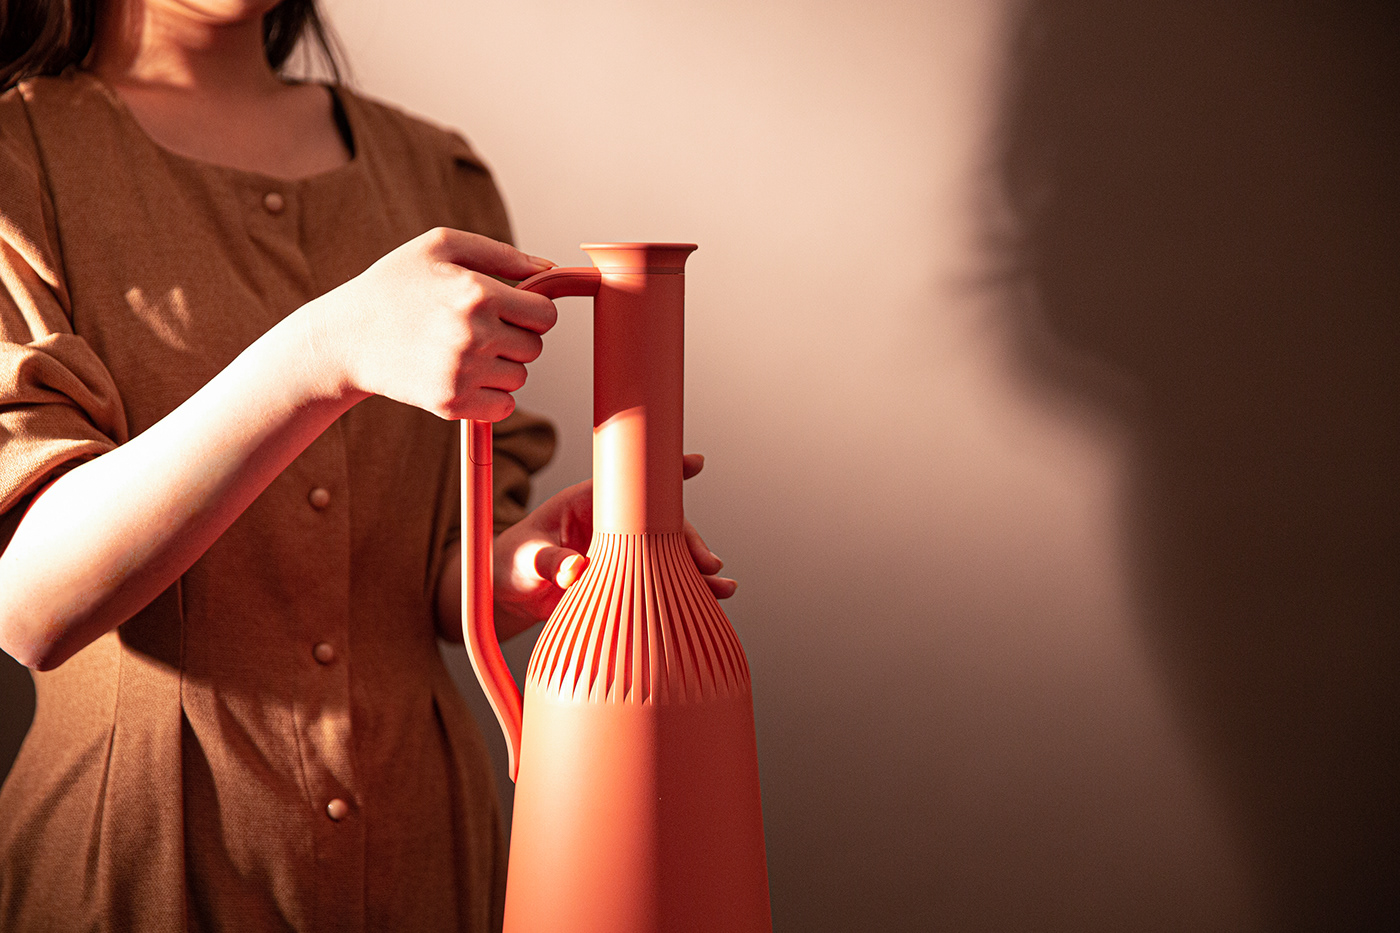 #interior #object #product #steam cleaner #vacuum #Vase #product design